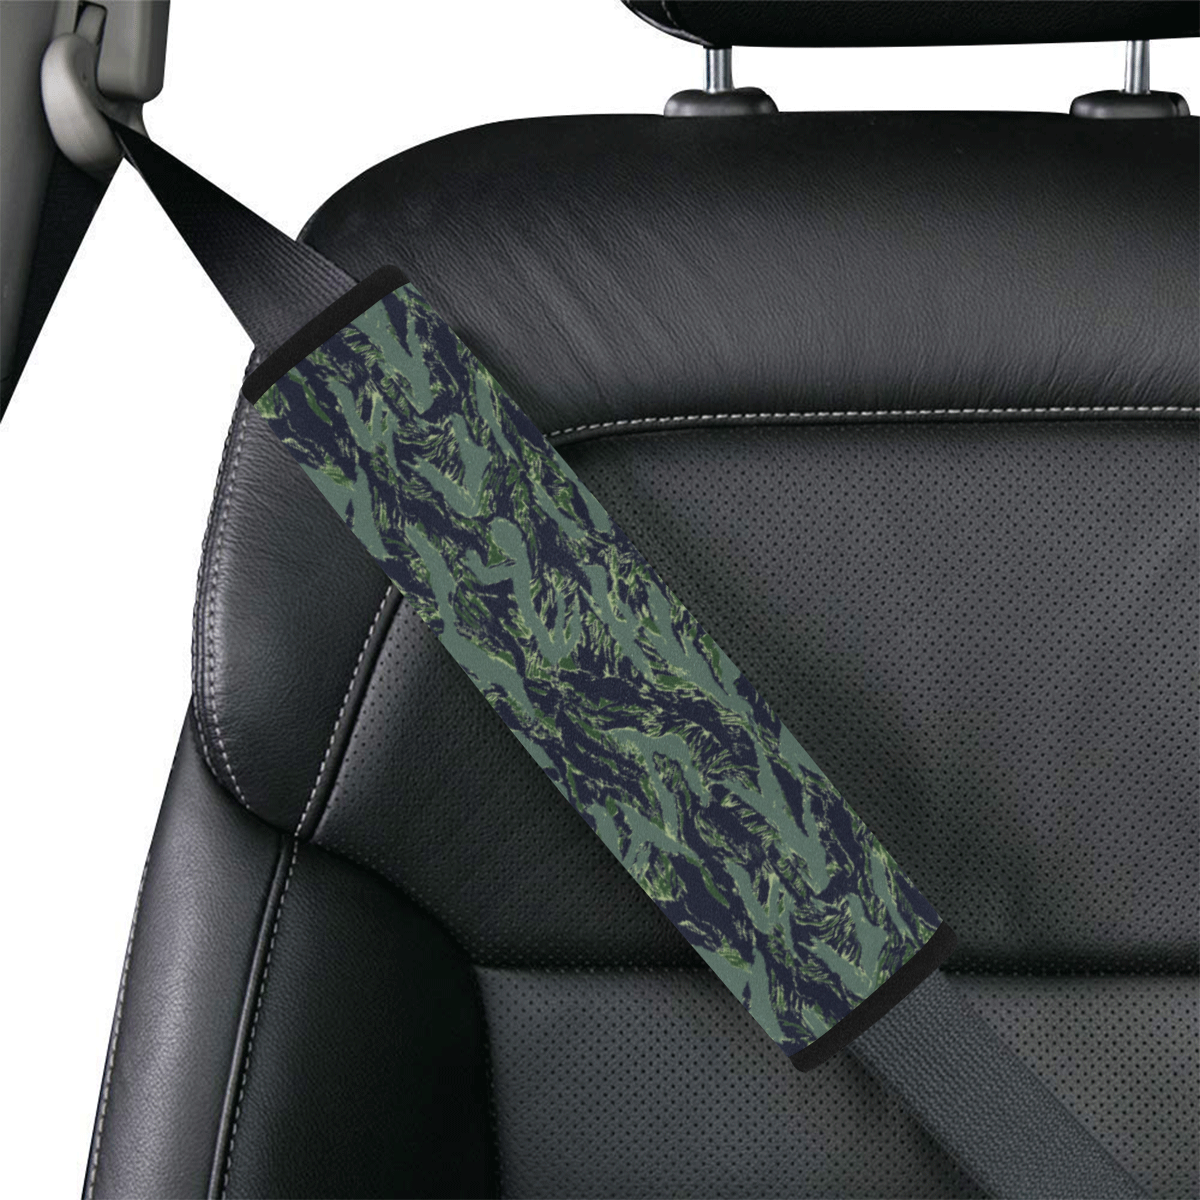 Jungle Tiger Stripe Green Camouflage Car Seat Belt Cover 7''x12.6''